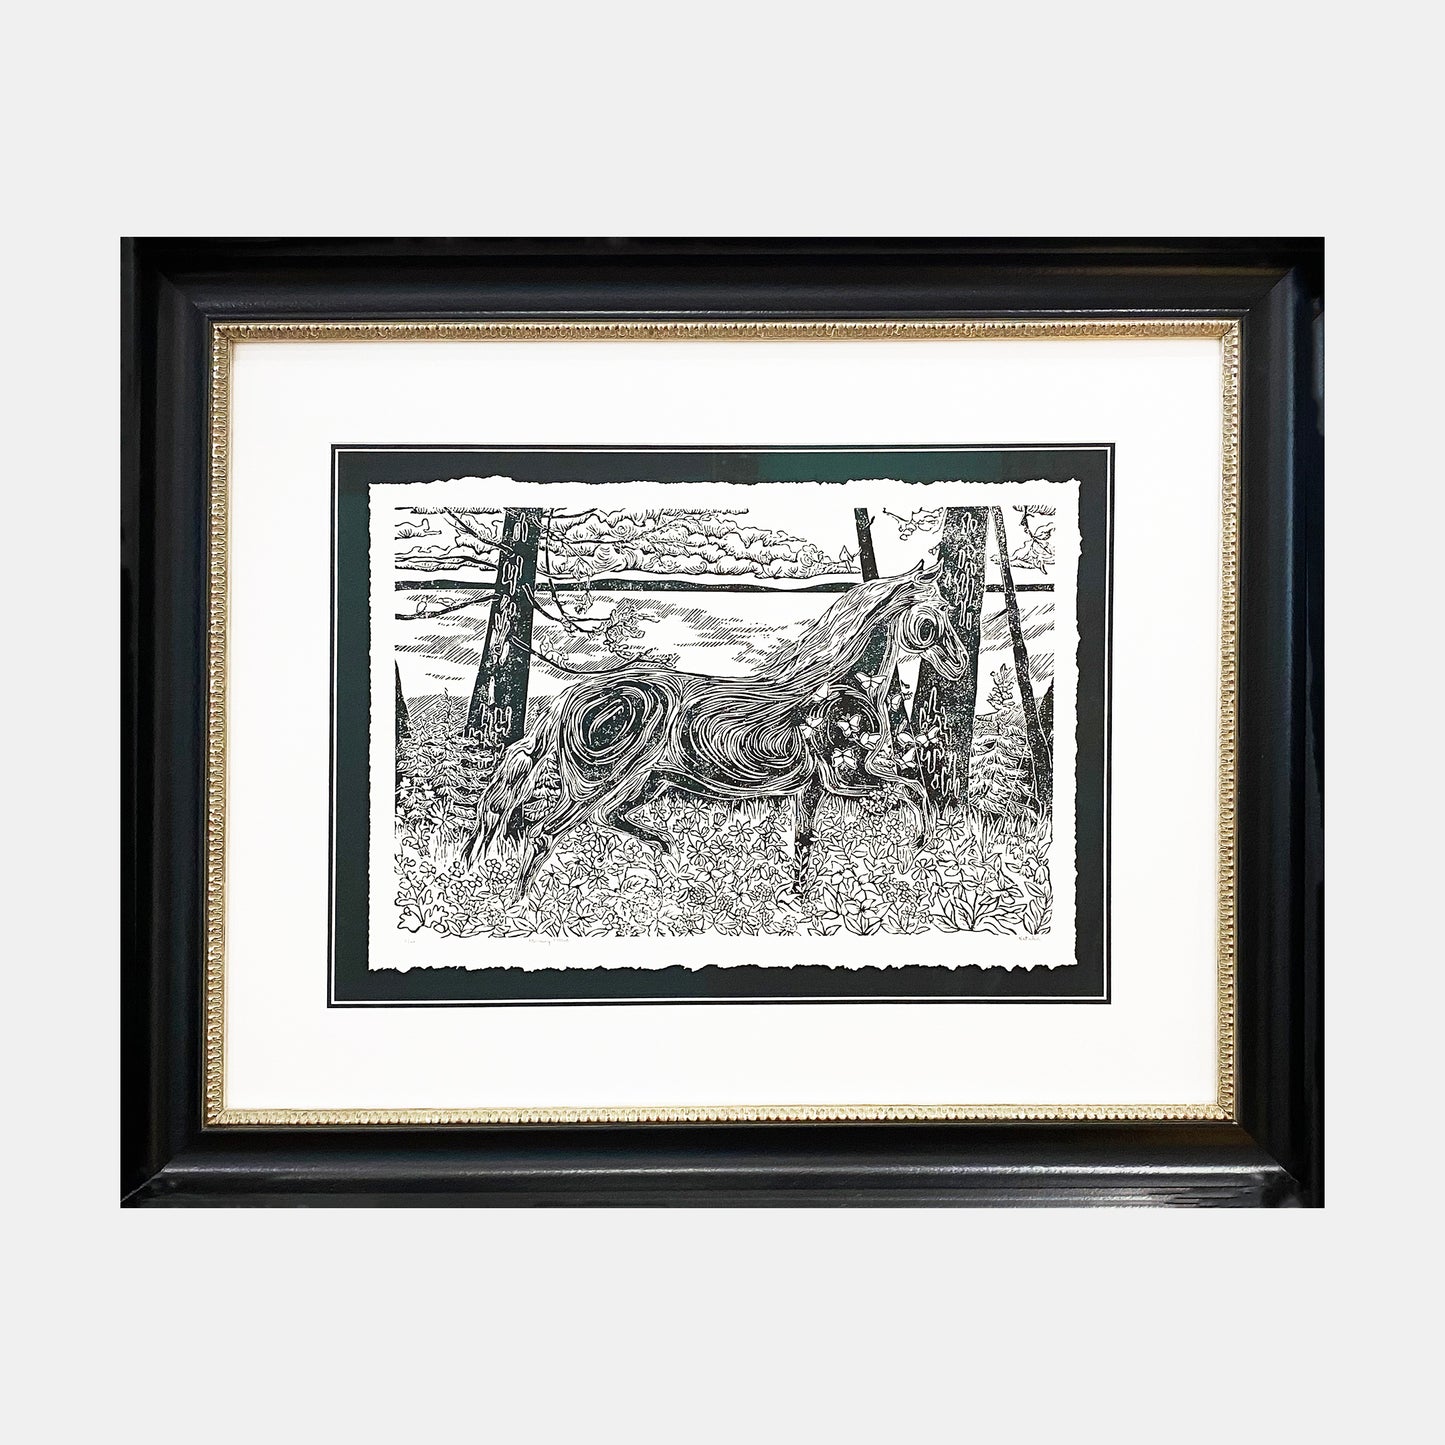 Framed horse art by Natalia Wohletz of Peninsula Prints, Milford & Mackinac Island, Michigan, titled Morning Frolic #1.